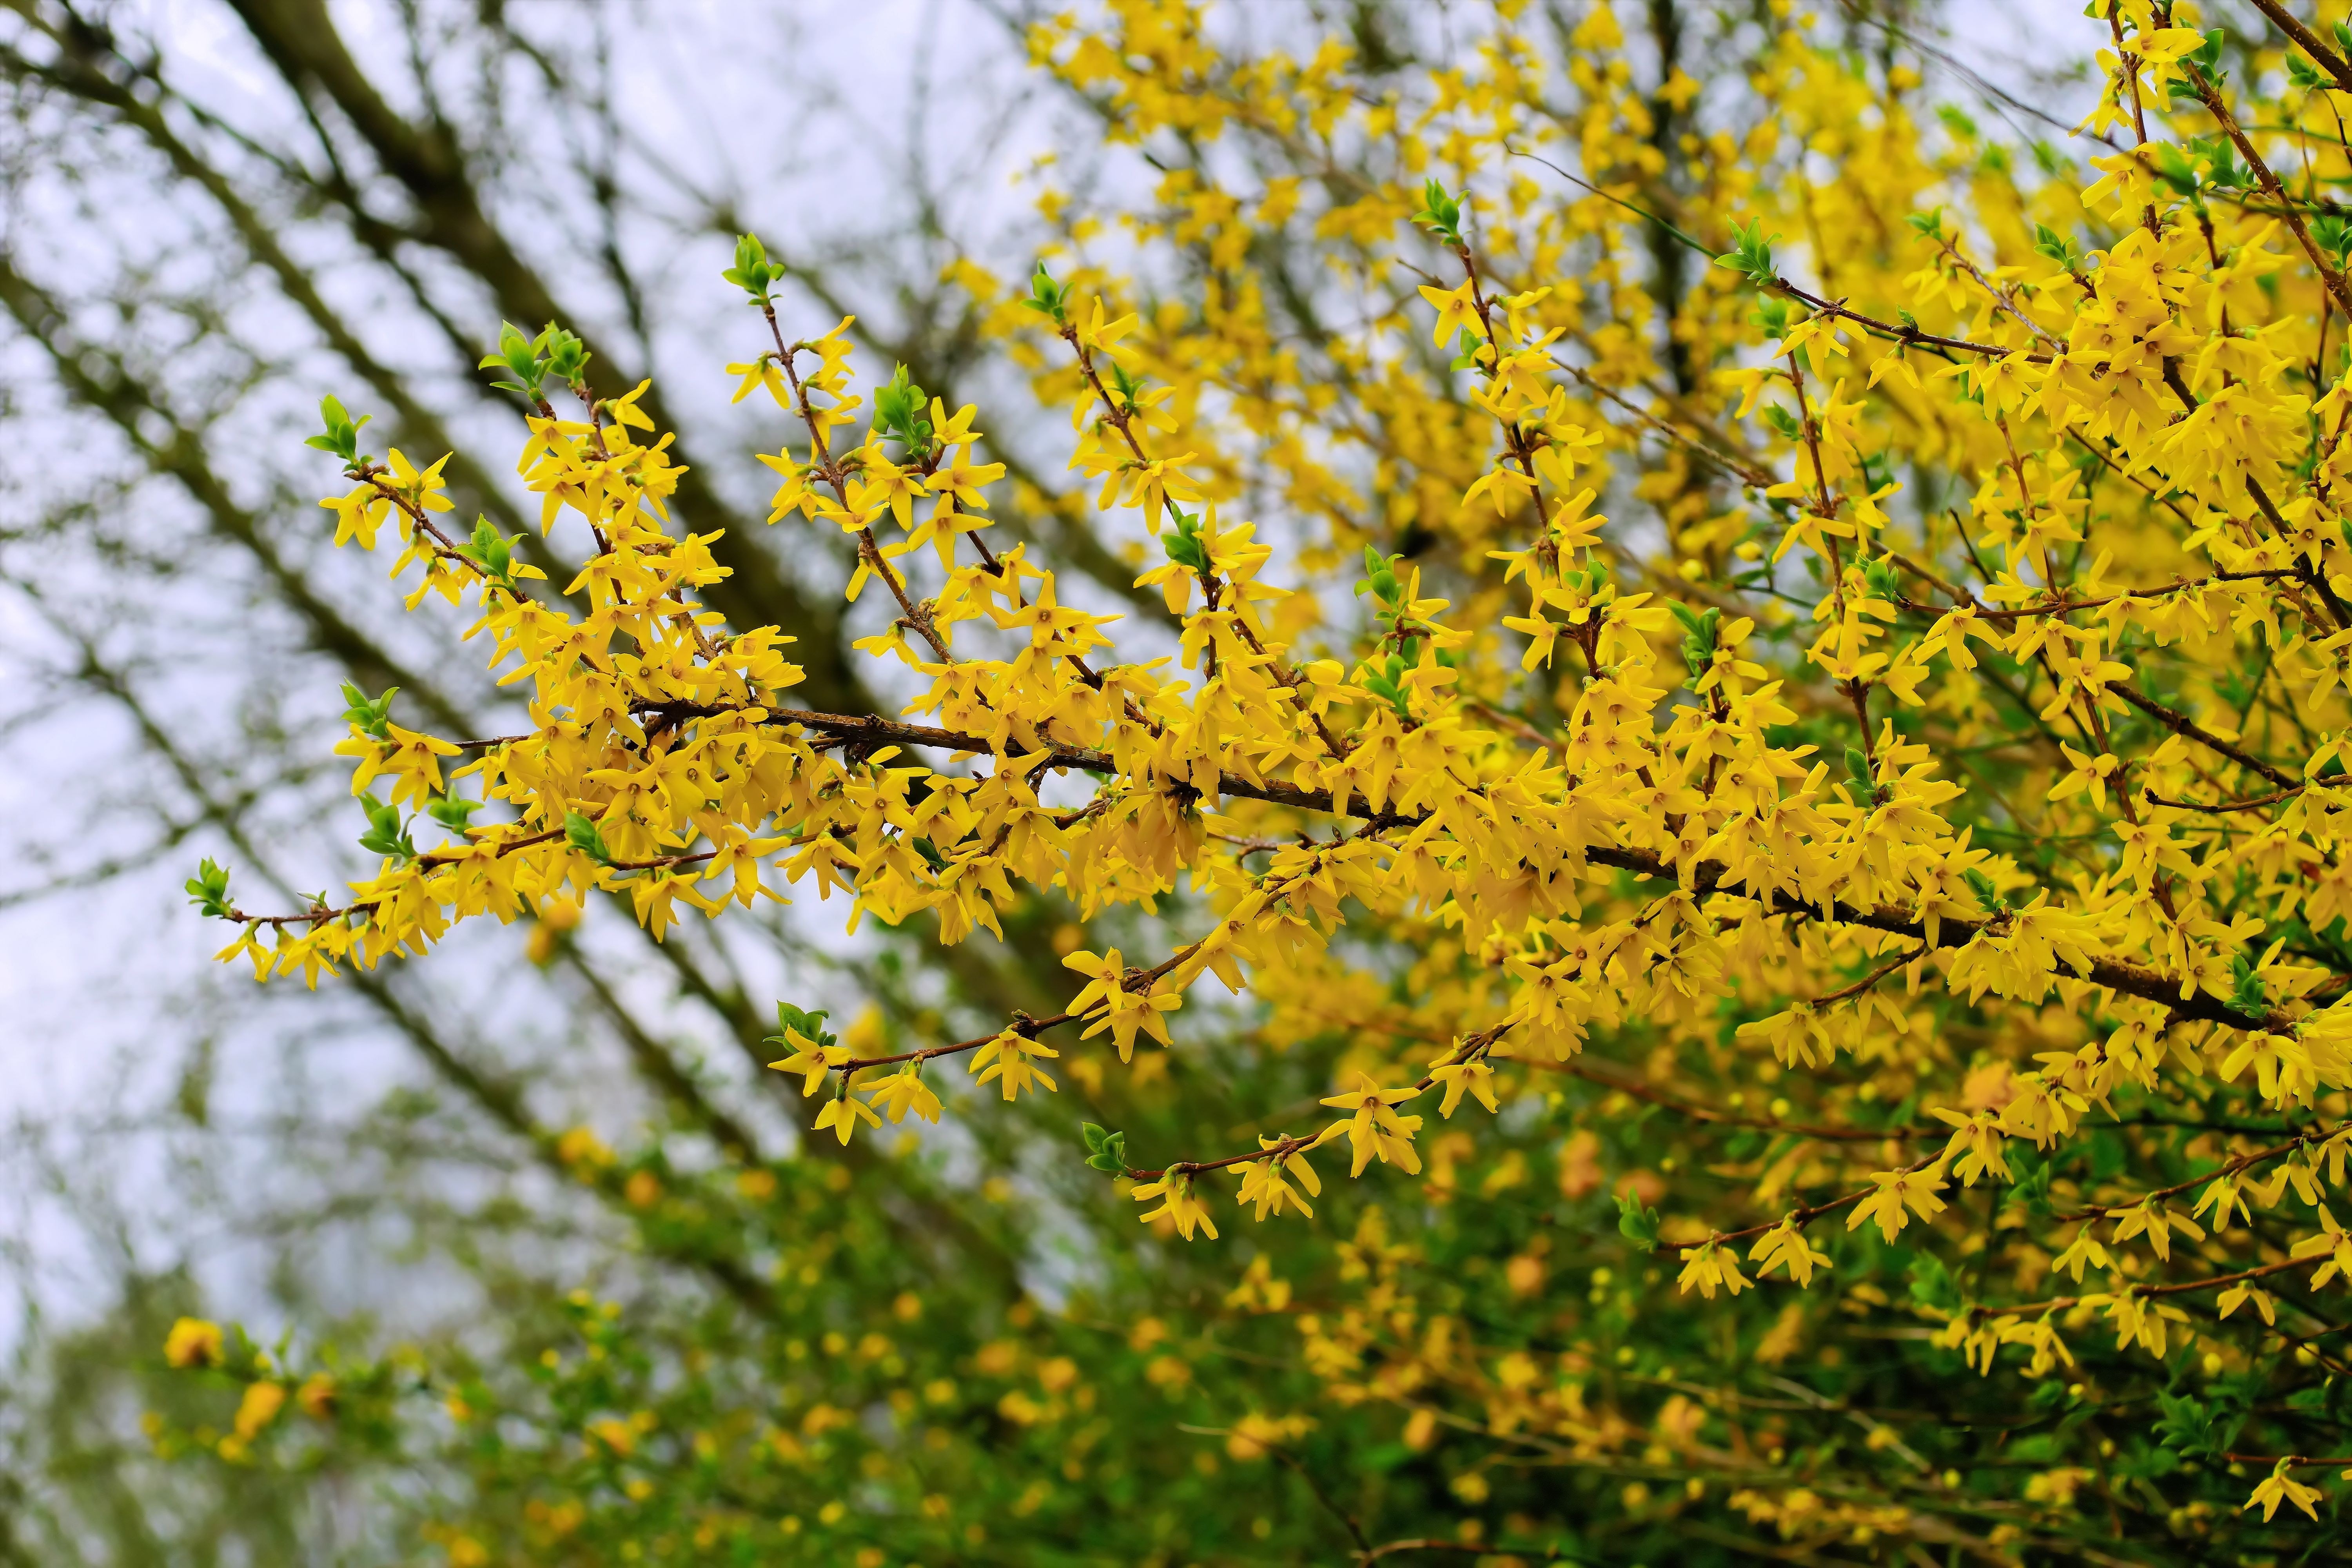 yellow leaf cluster flower